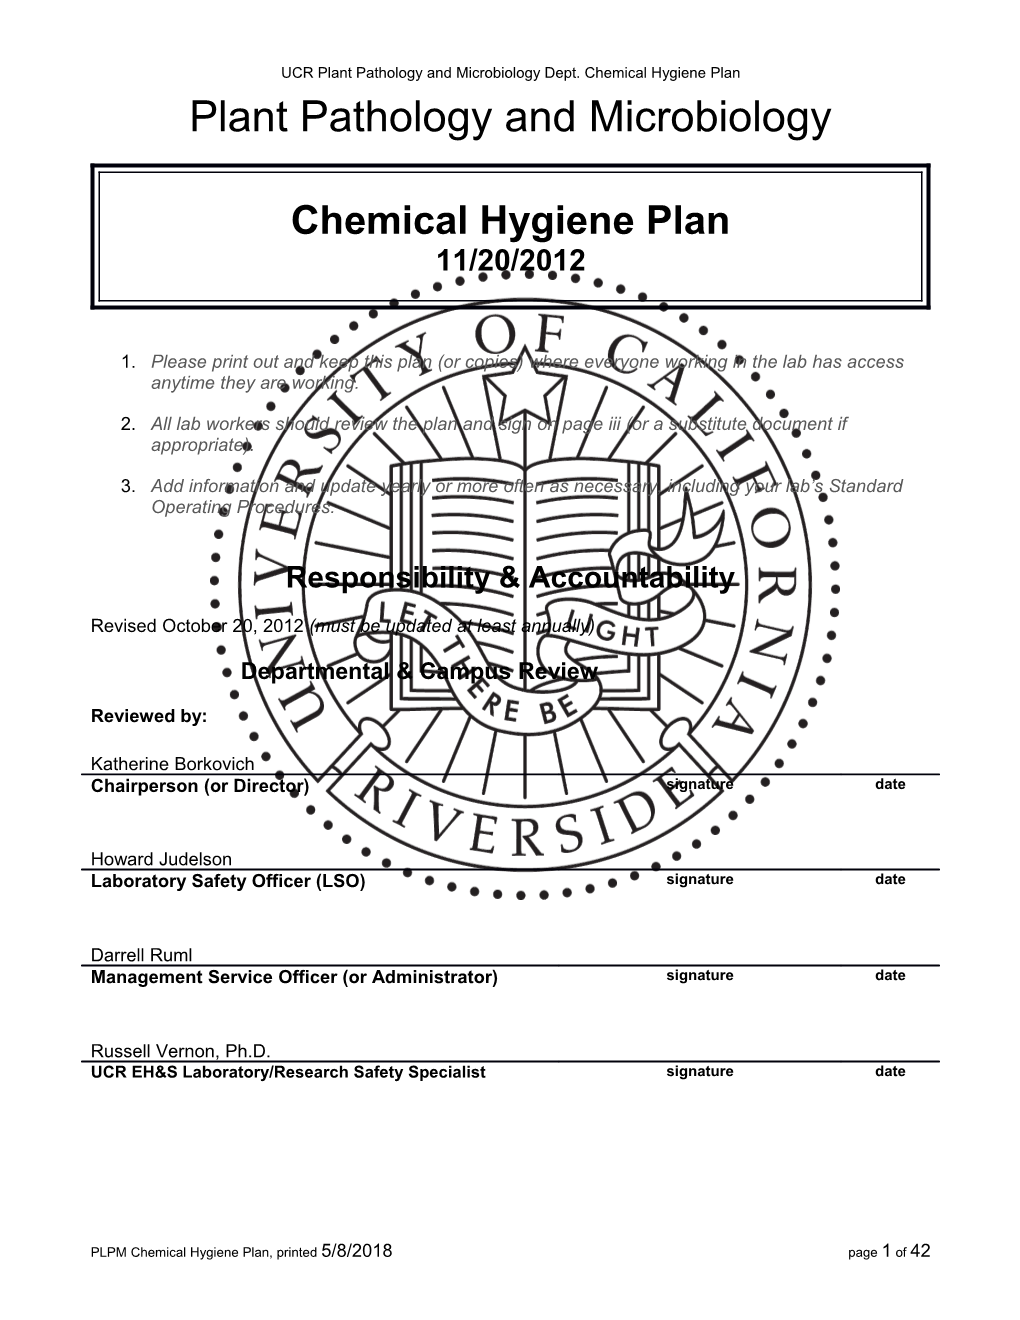 Chemical Hygiene Template